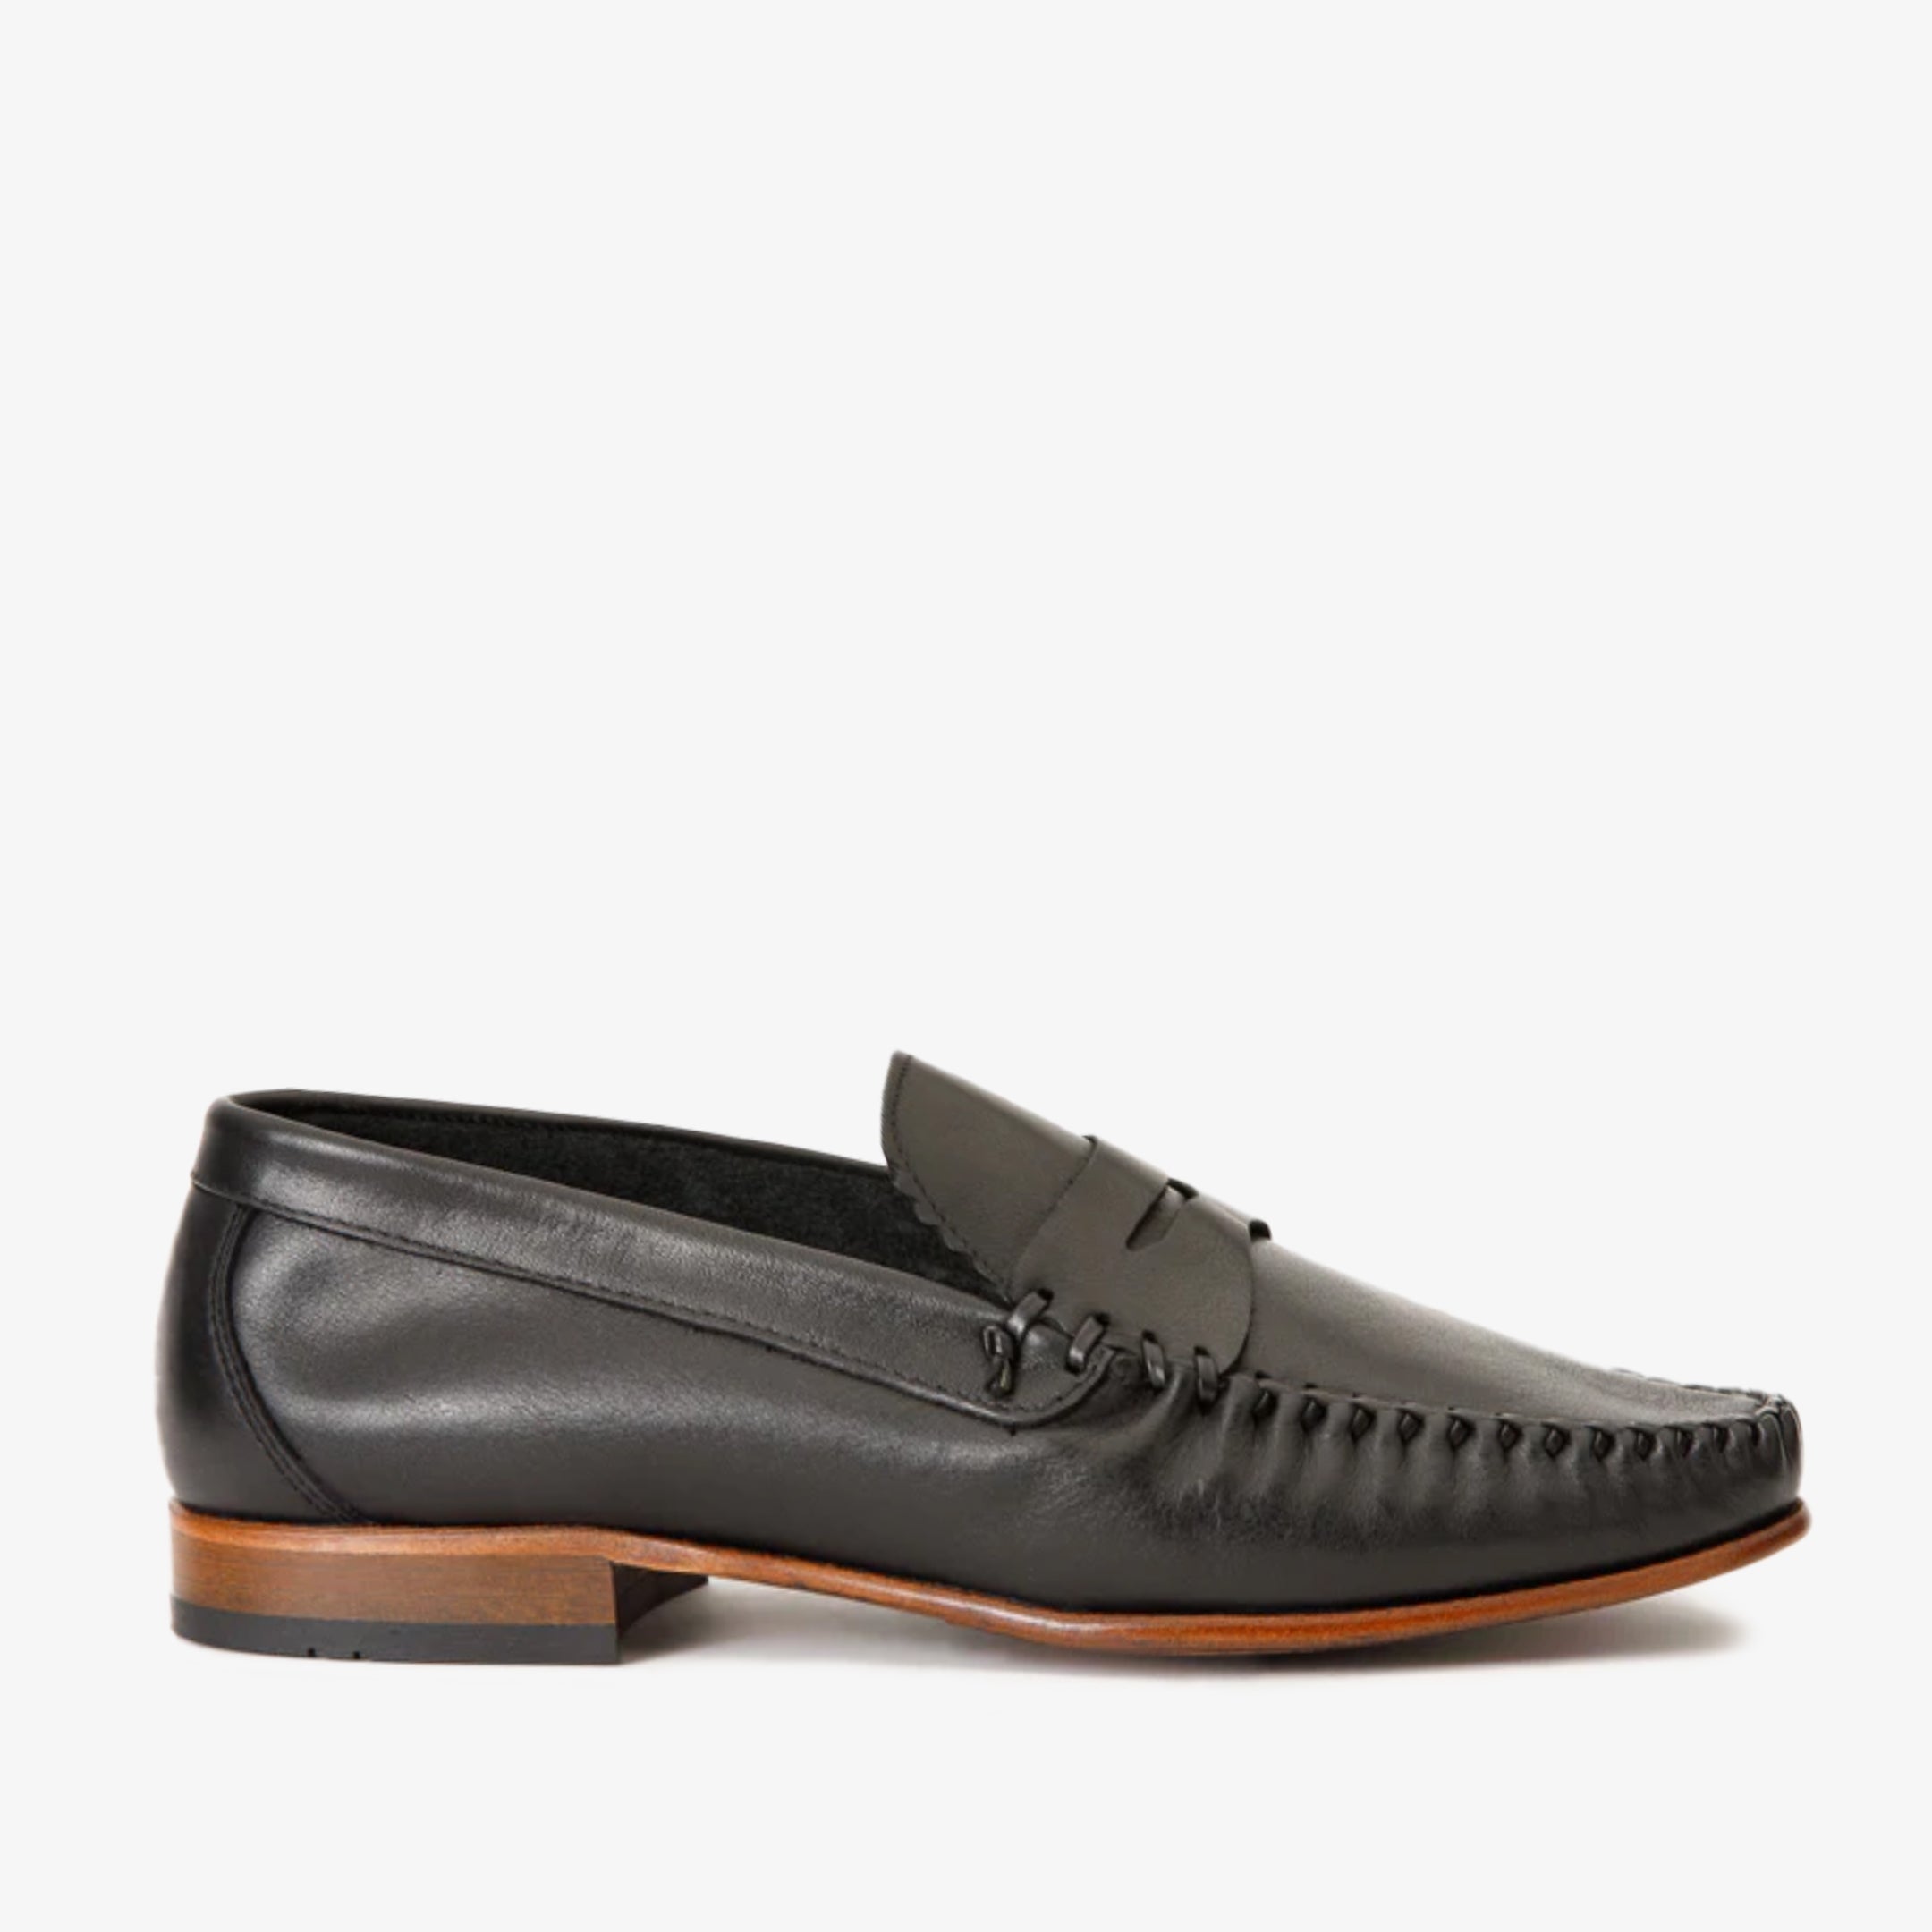 The Eregli Black Leather Penny Loafer Men Shoe